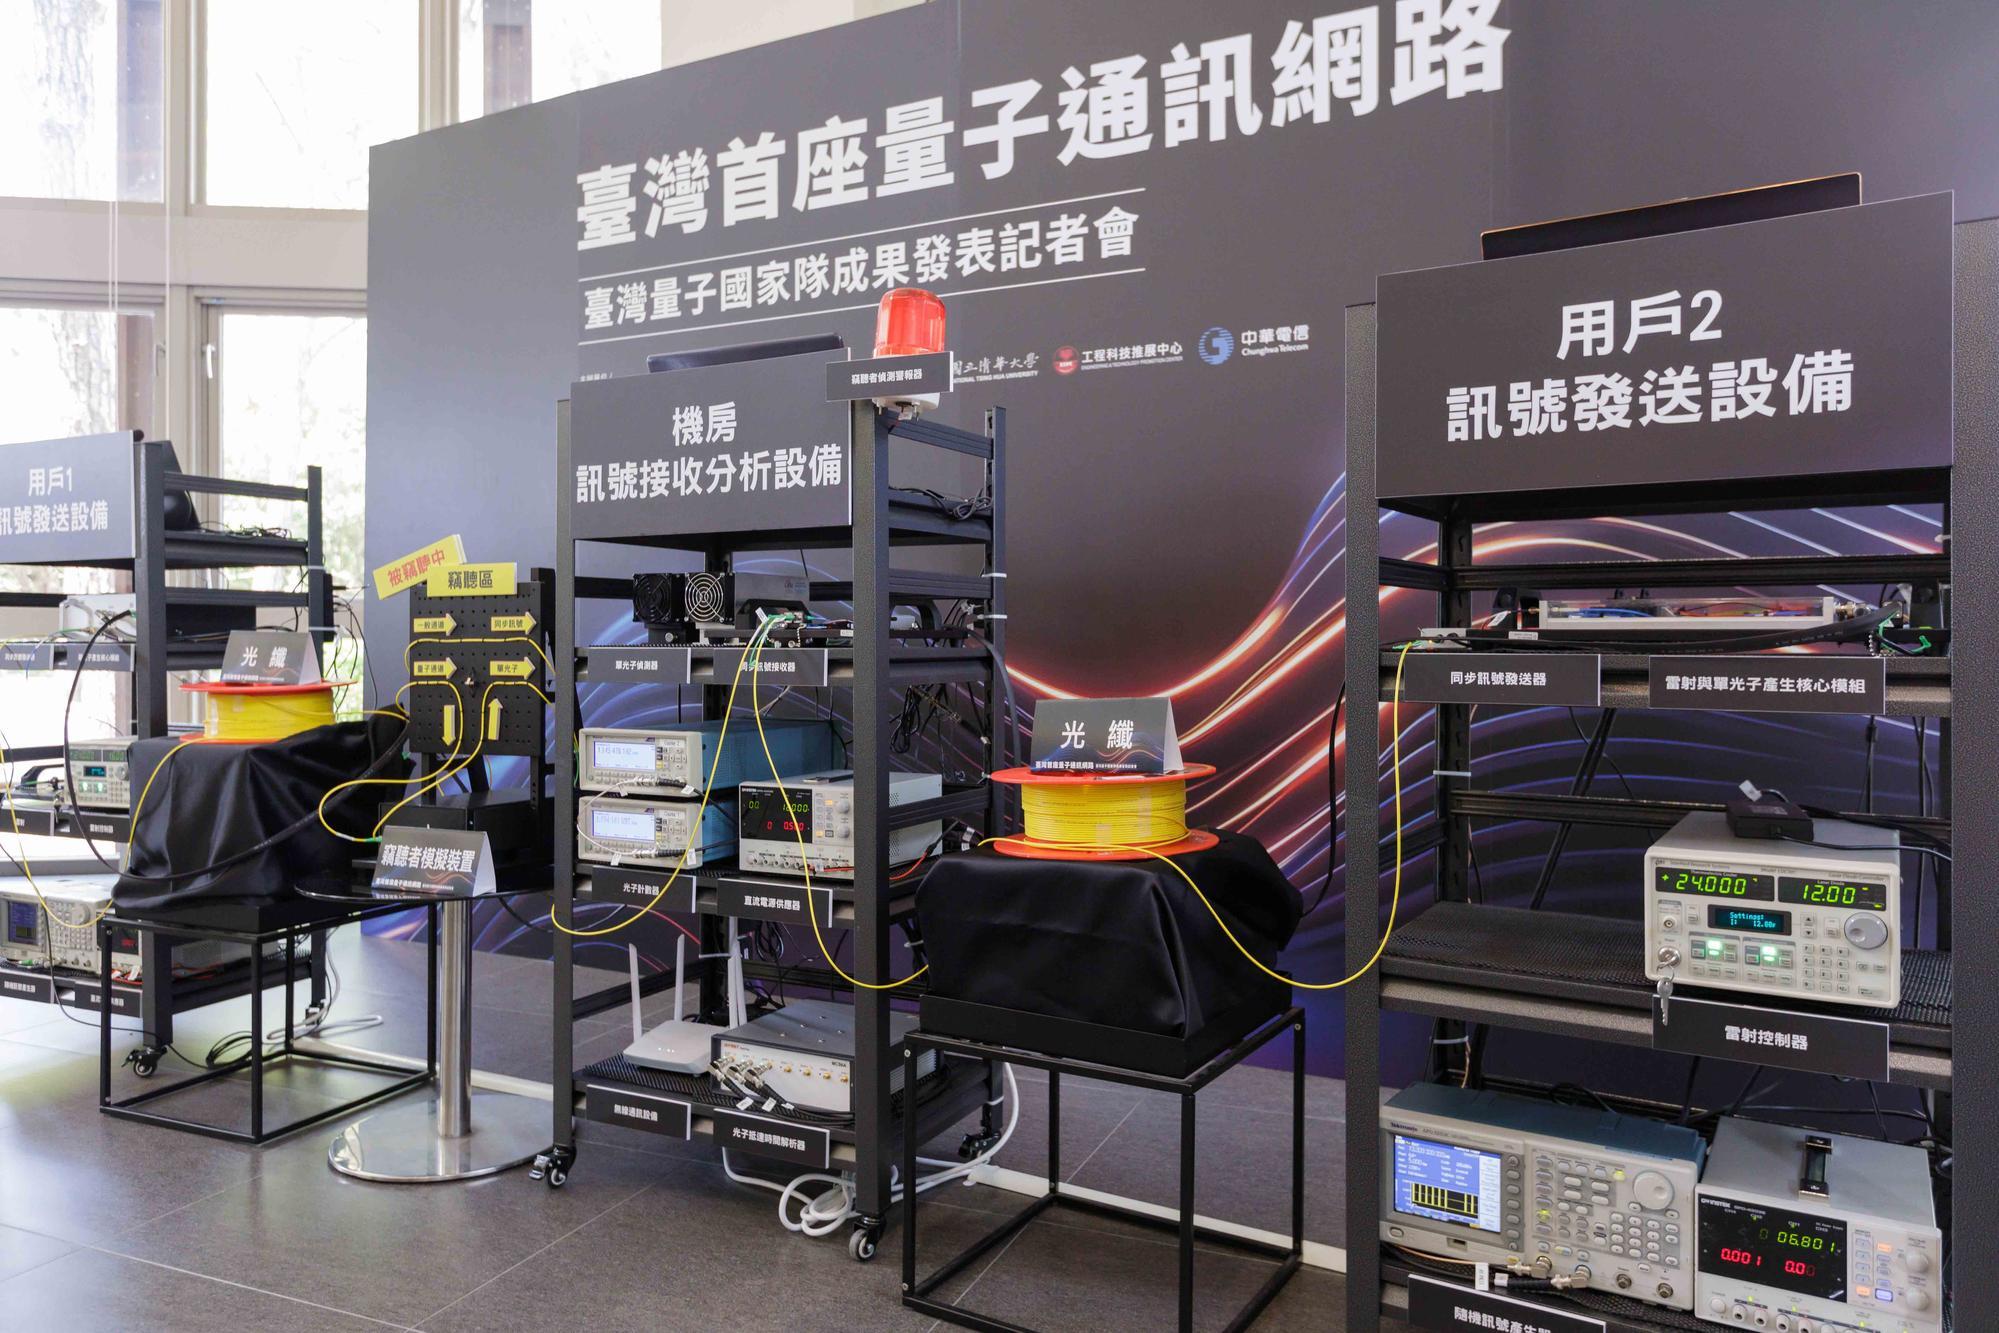 清華團隊展示臺灣第一座量子加密通訊網路。
Taiwan's first quantum secure communication network.